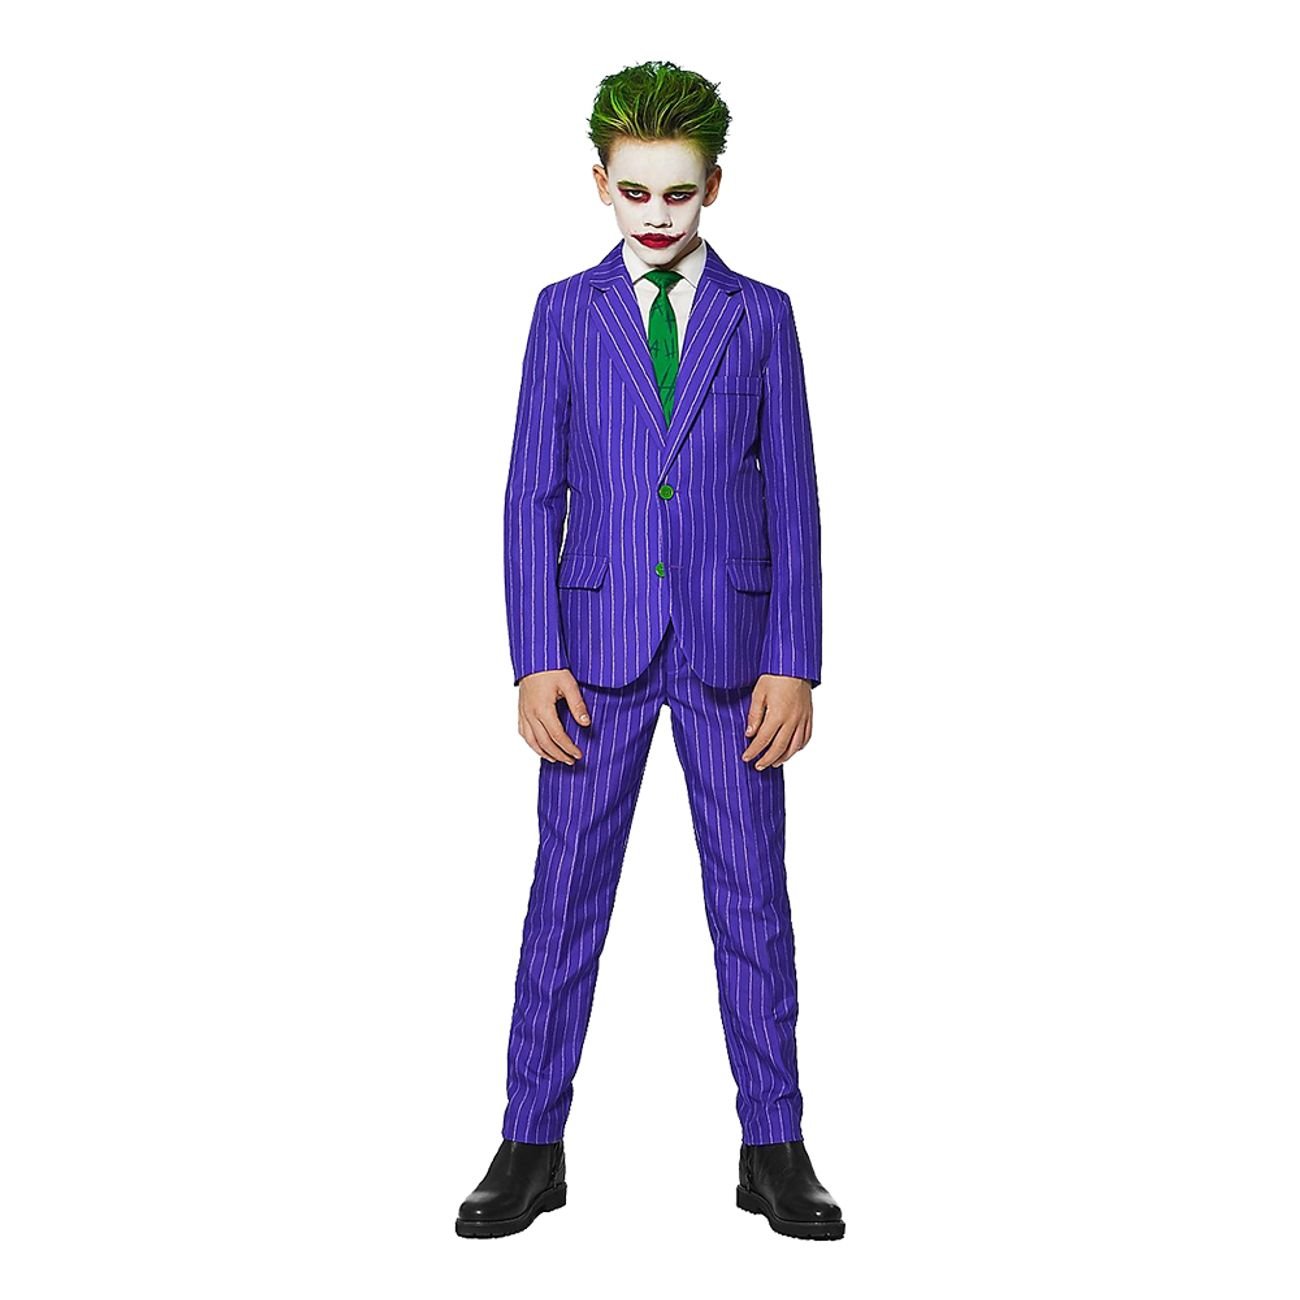 suitmeister-boys-the-joker-kostym-79318-1